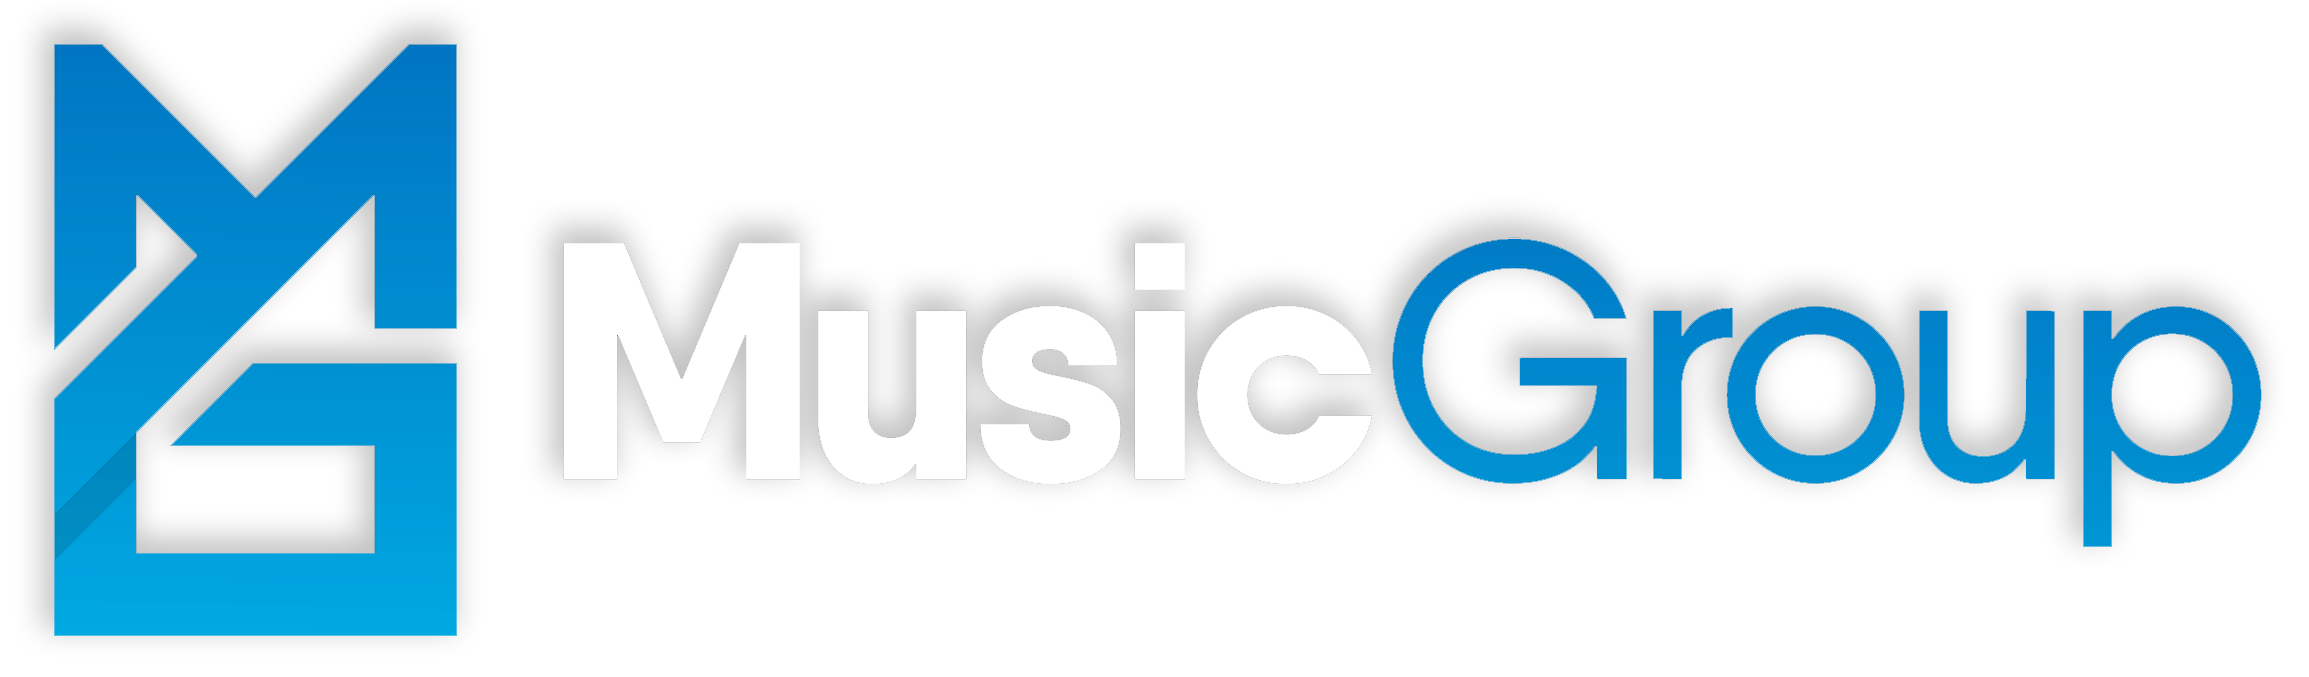 musicgroup logo_drop